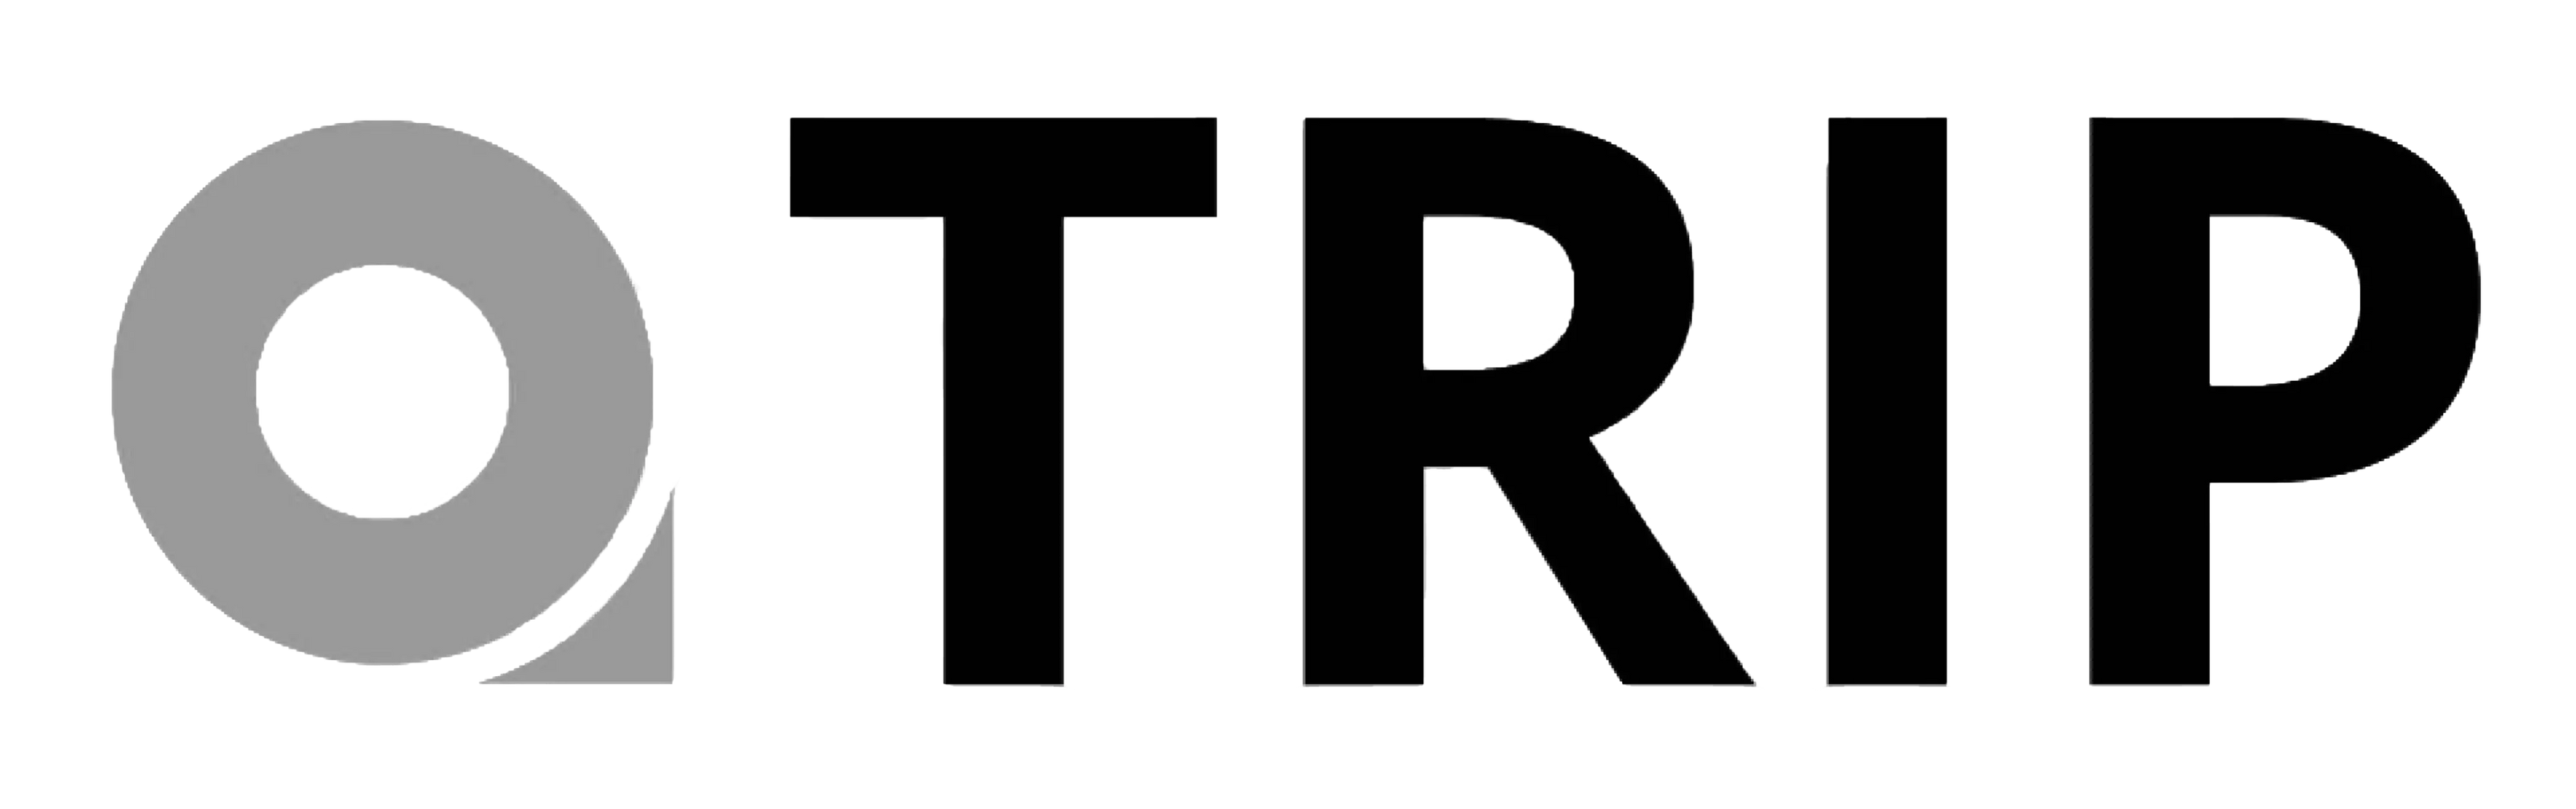 TRIP Thuringian Regional Innovation Program logo